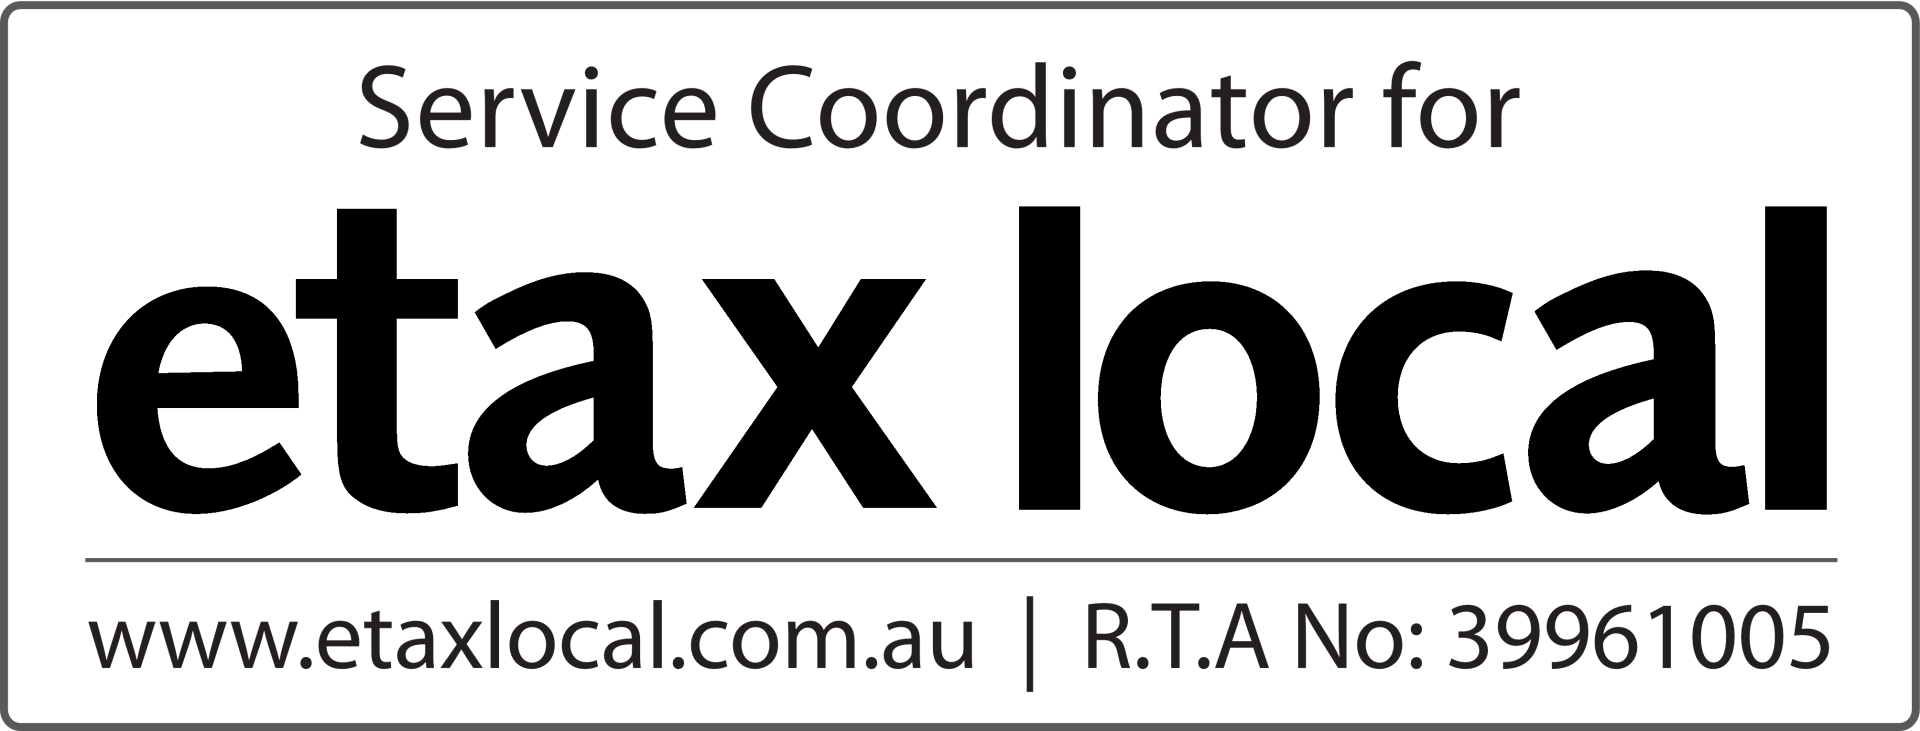 Etax Local logo displaying Service Coordinator for Etax Local & www.etaxlocal.com.au and RTA No: 39961005